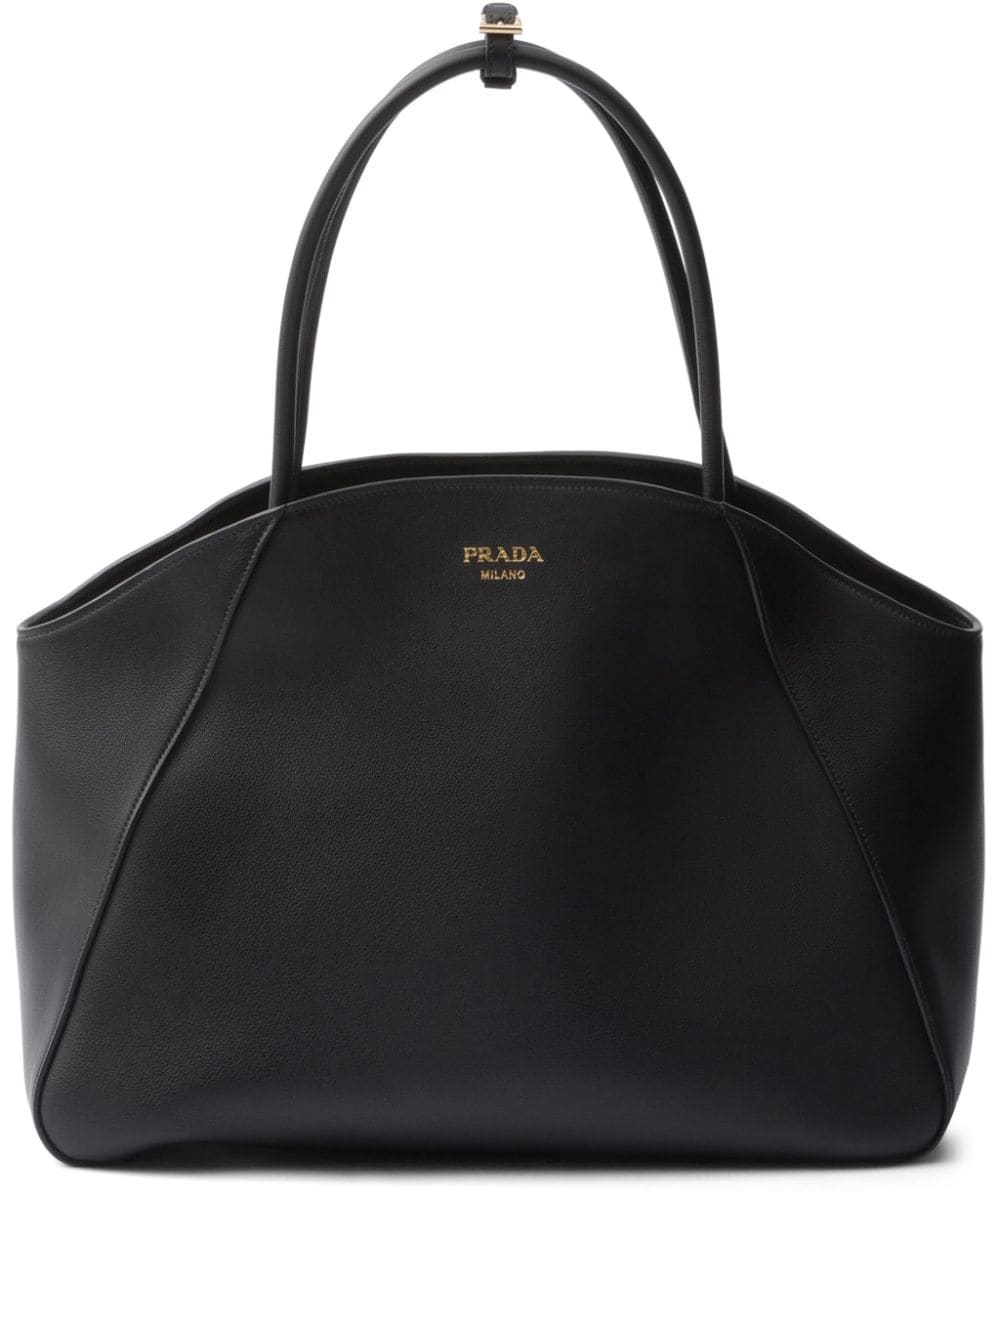 Prada large leather tote bag - Black von Prada